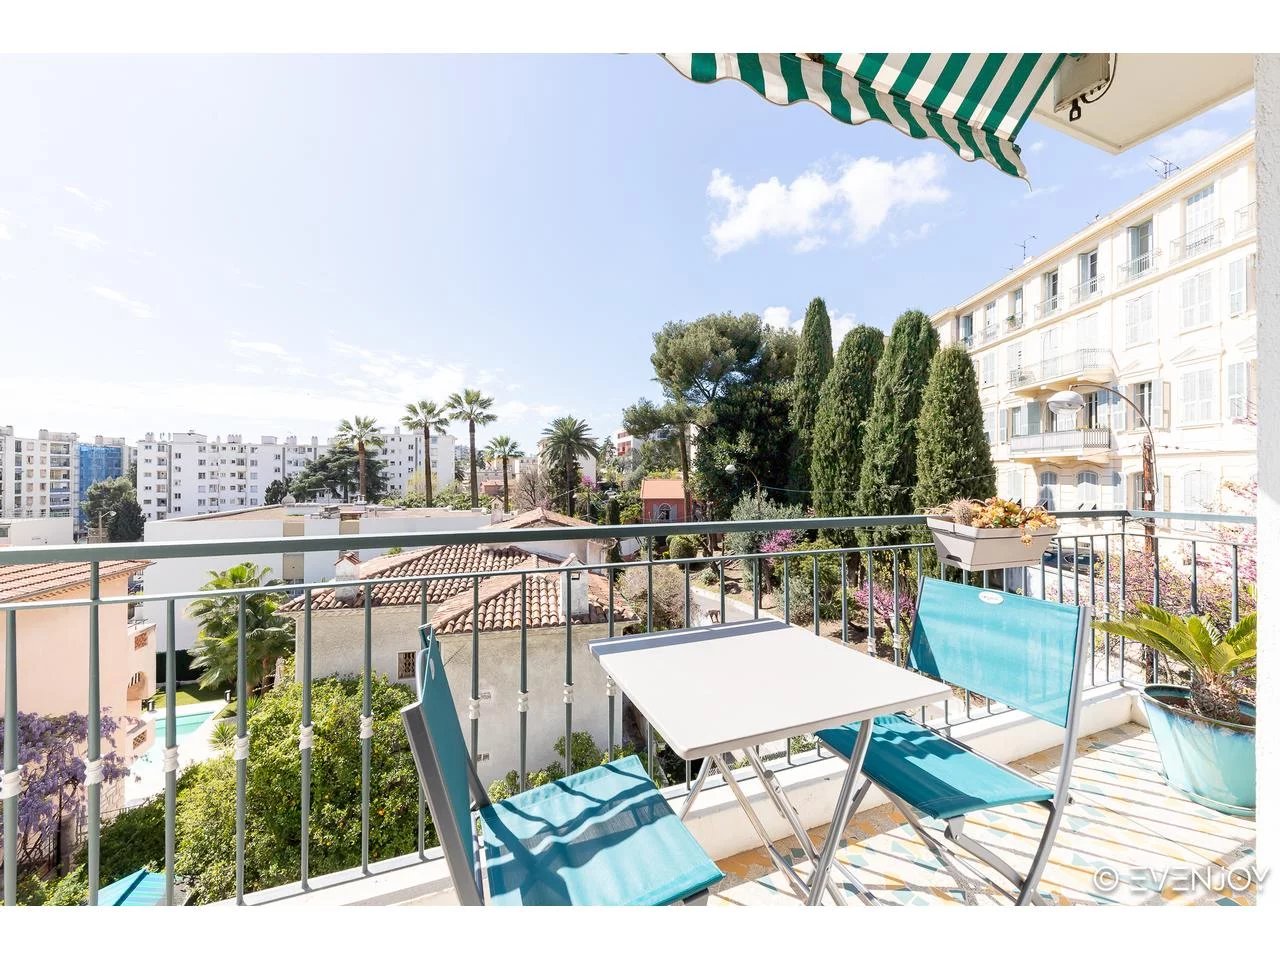 Vente Appartement 83m² 3 Pièces à Nice (06000) - Primo L'Immo Europeenne